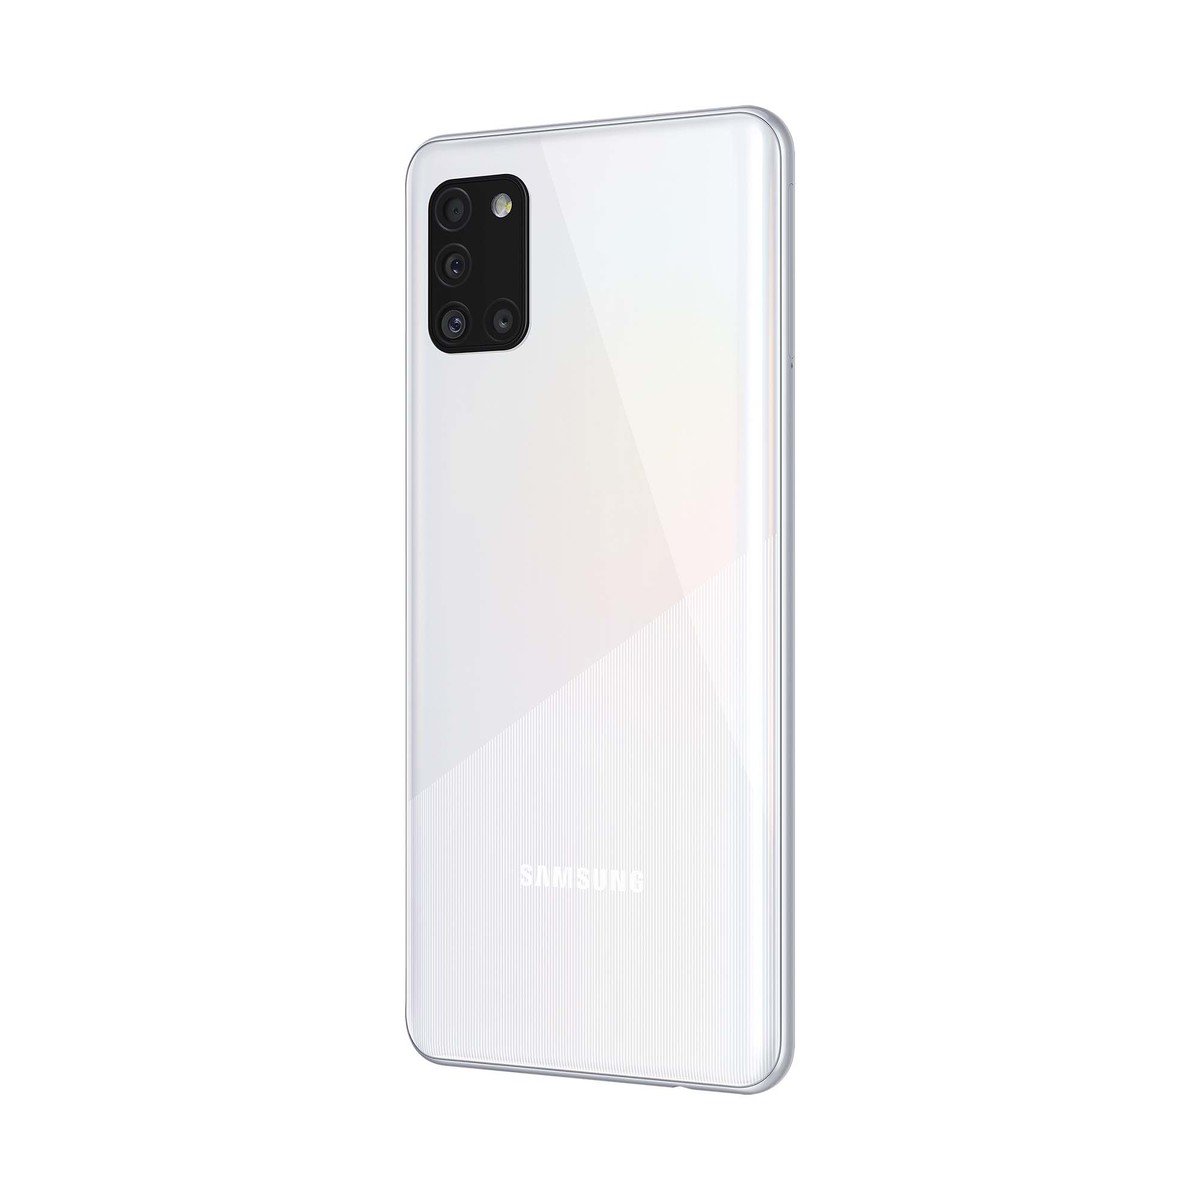 Samsung Galaxy A31 SMA315 128GB White